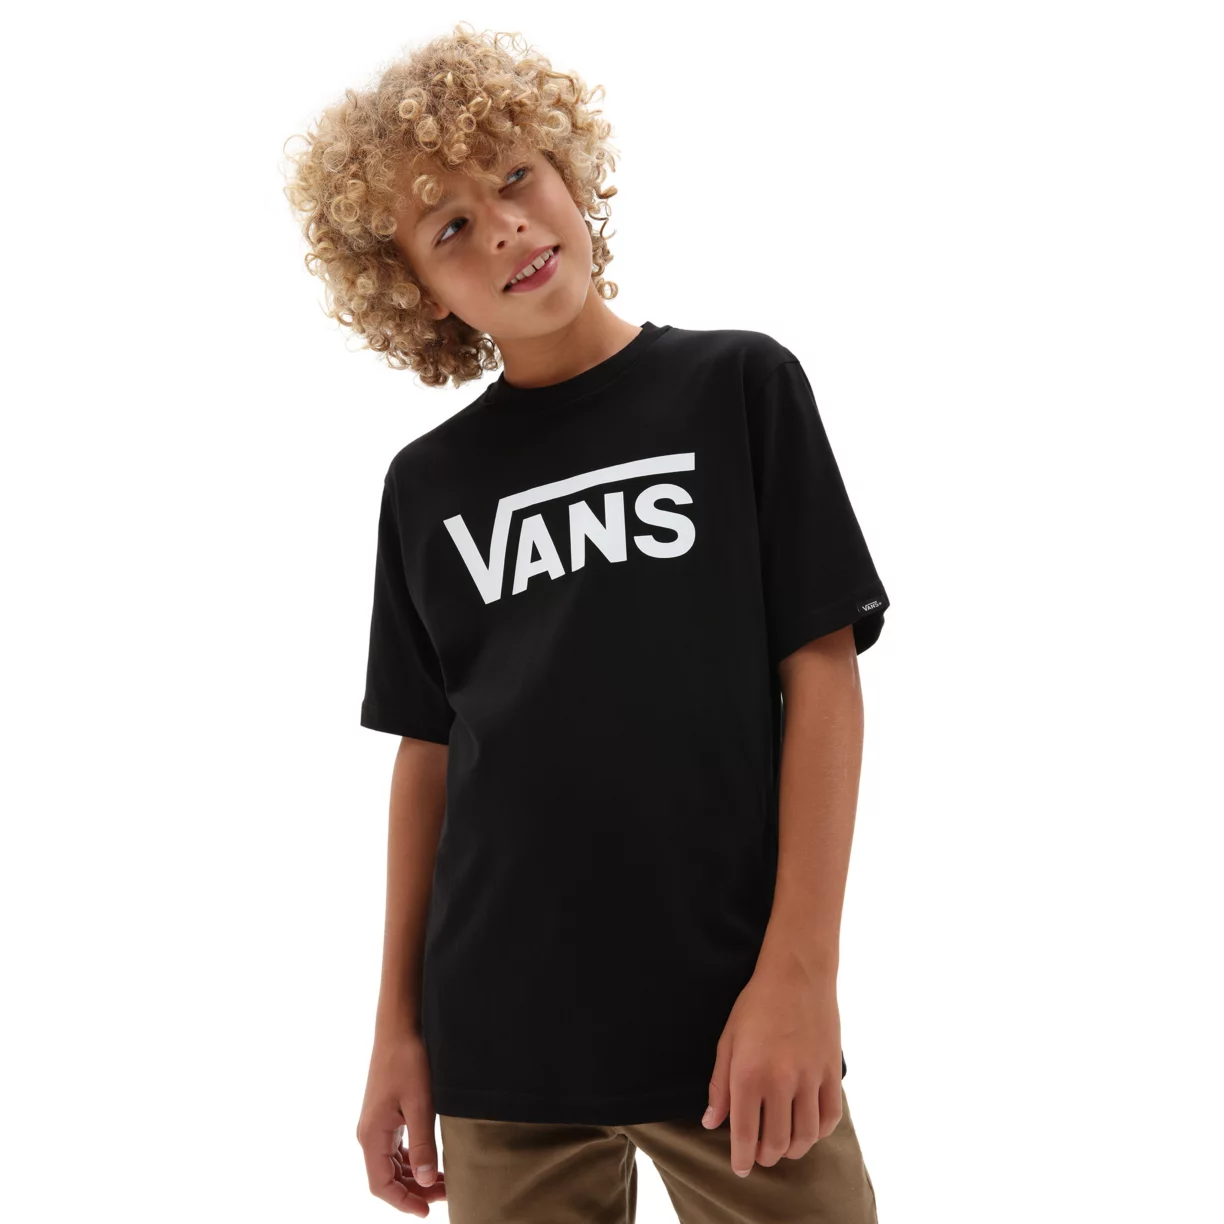 Vans classic - T-shirts - black/white